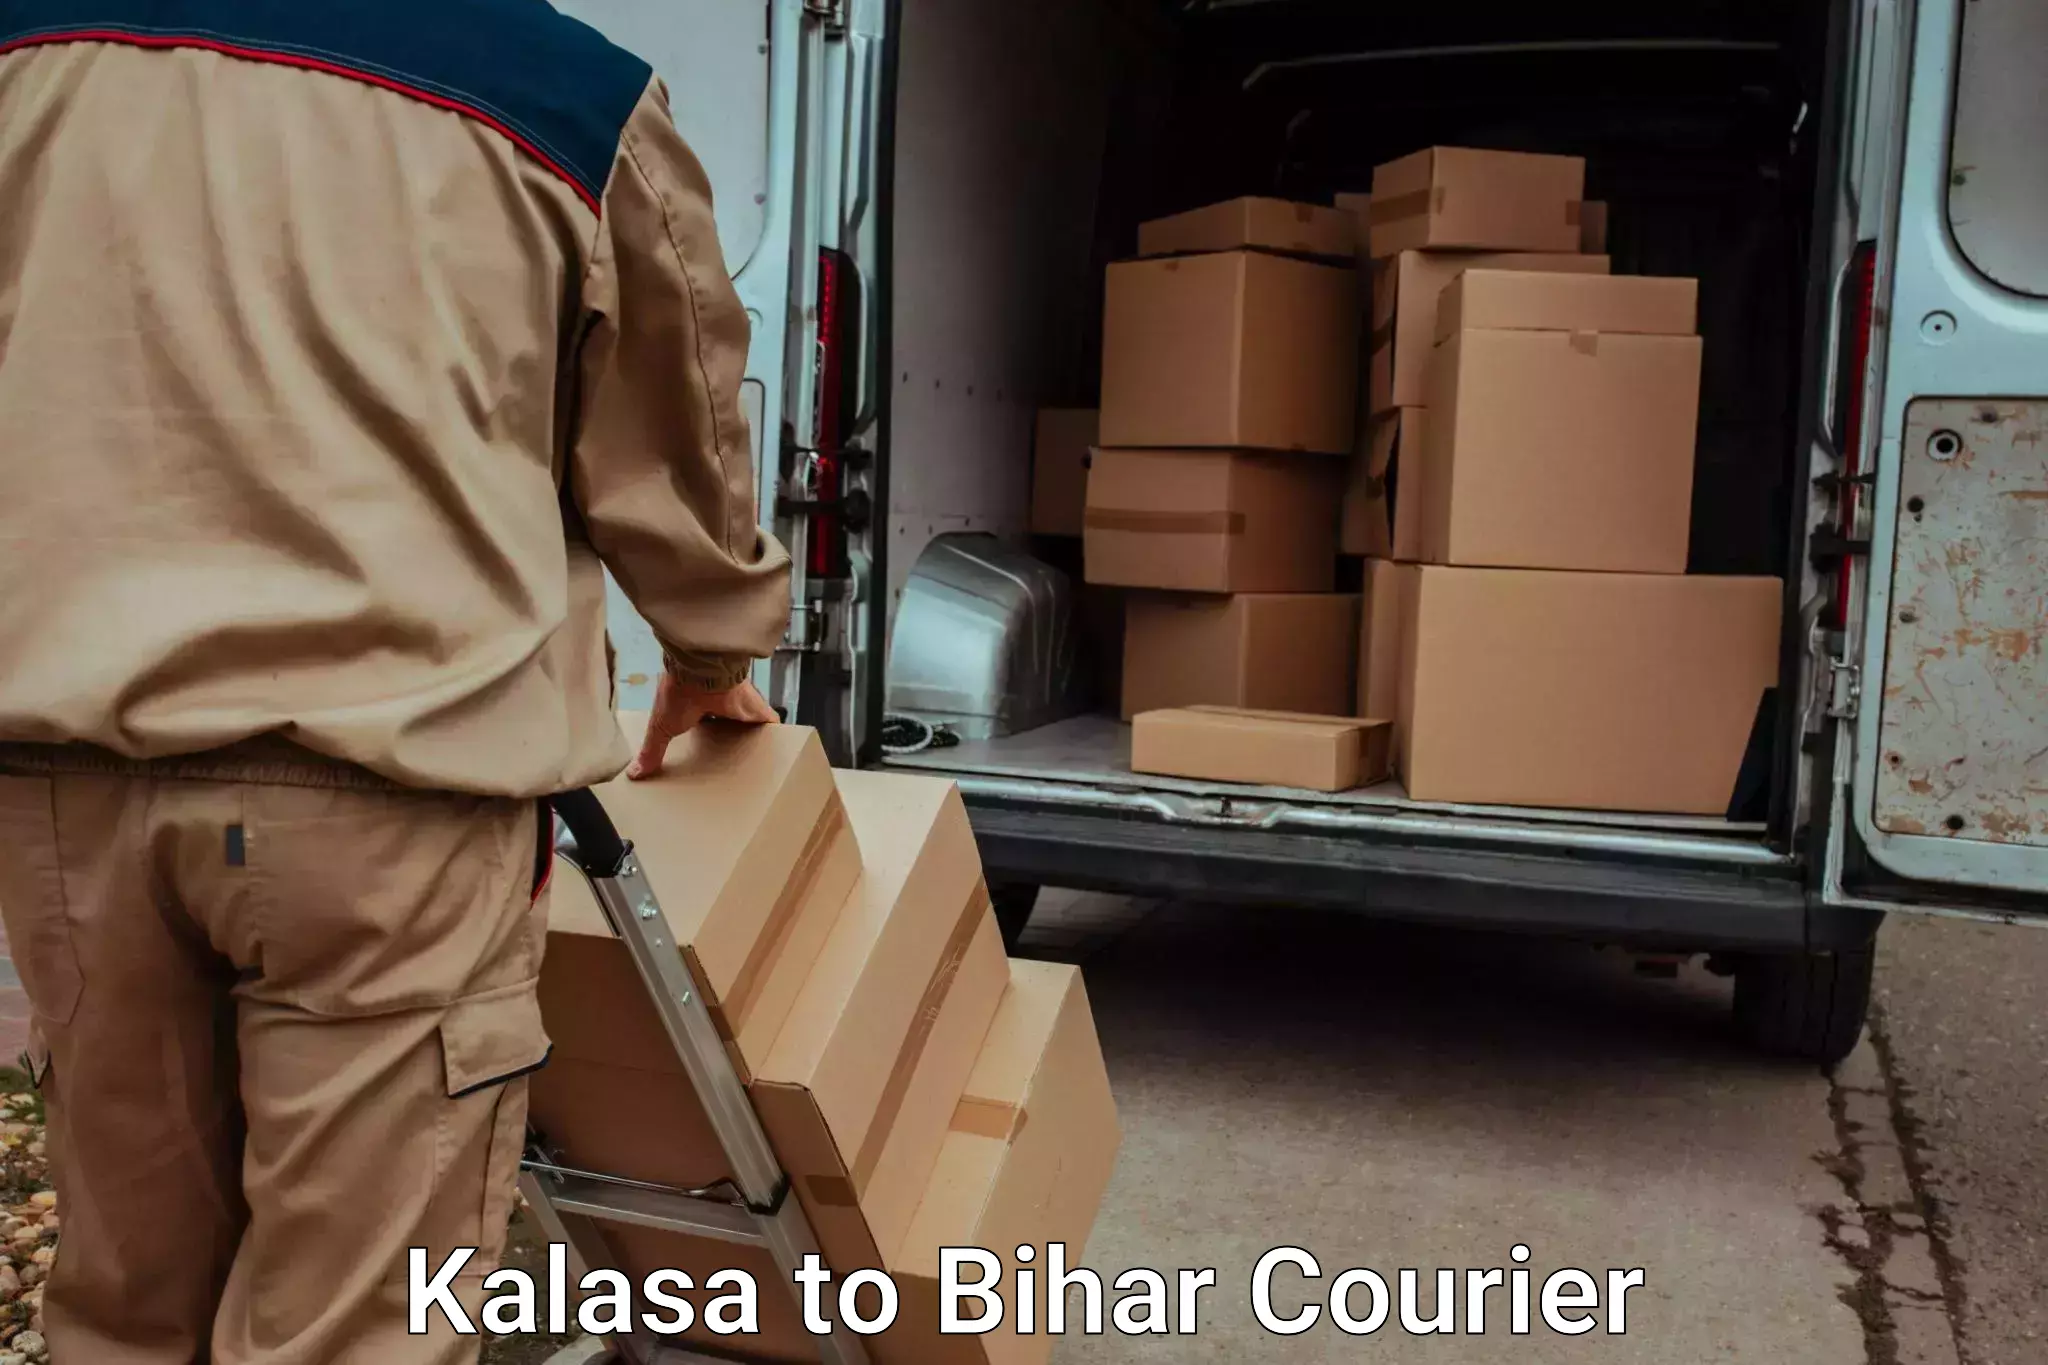 Professional moving company Kalasa to Bihar